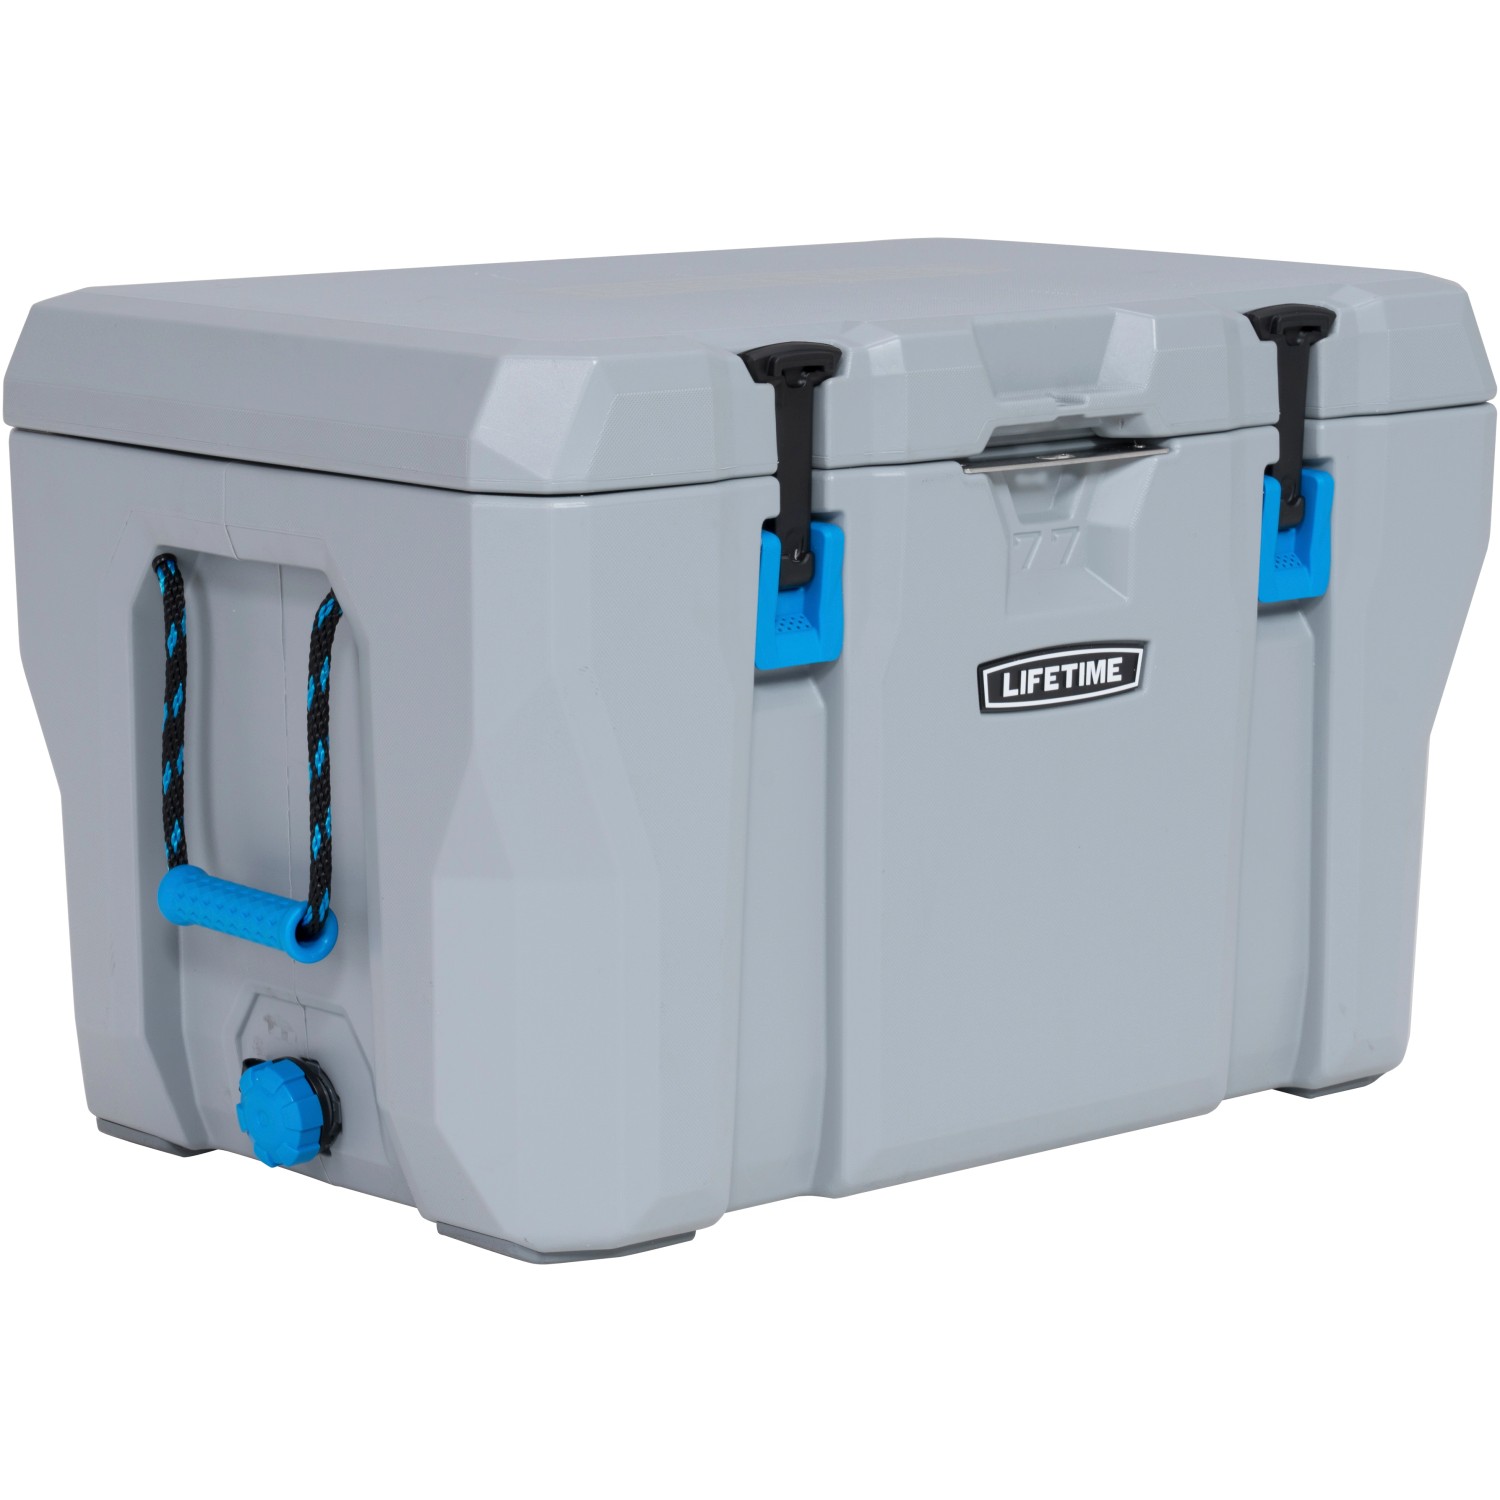 Lifetime Kühlbox Premium Campingbox Cooler Inkl. Tragegriffen 73 Liter